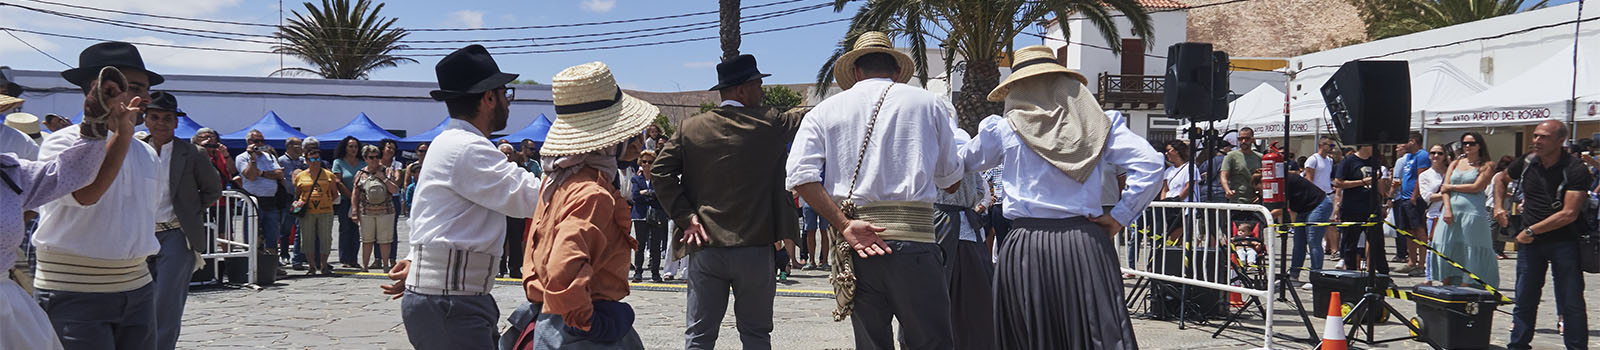 Veranstaltungen Messen auf Fuerteventura: Mercado de Tetir